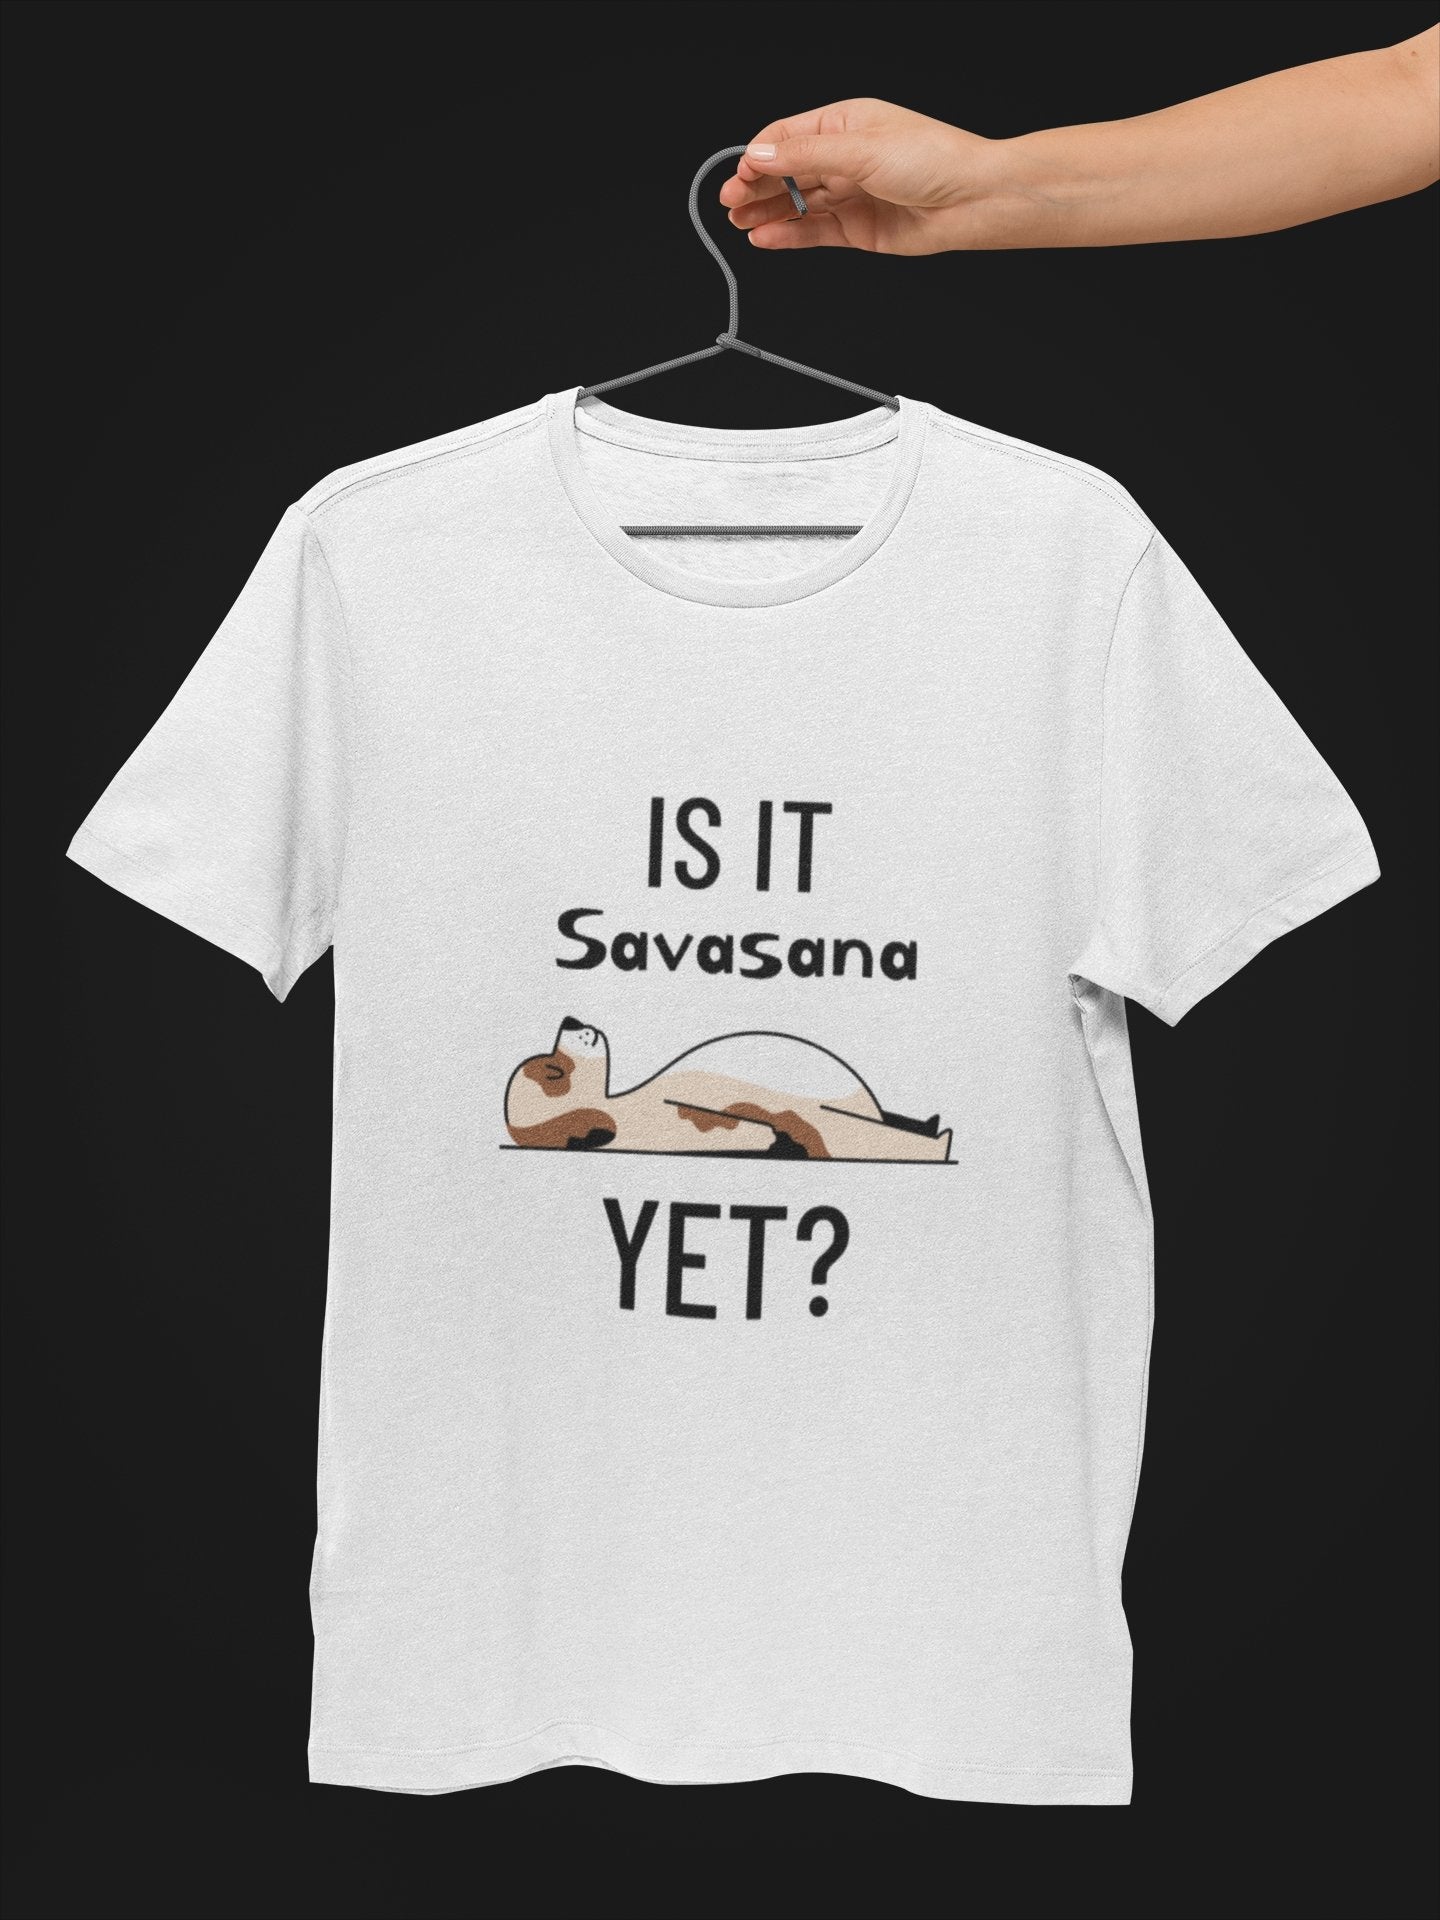 thelegalgang,Is it Savasana Yet design Yoga T shirt for Men,MEN.